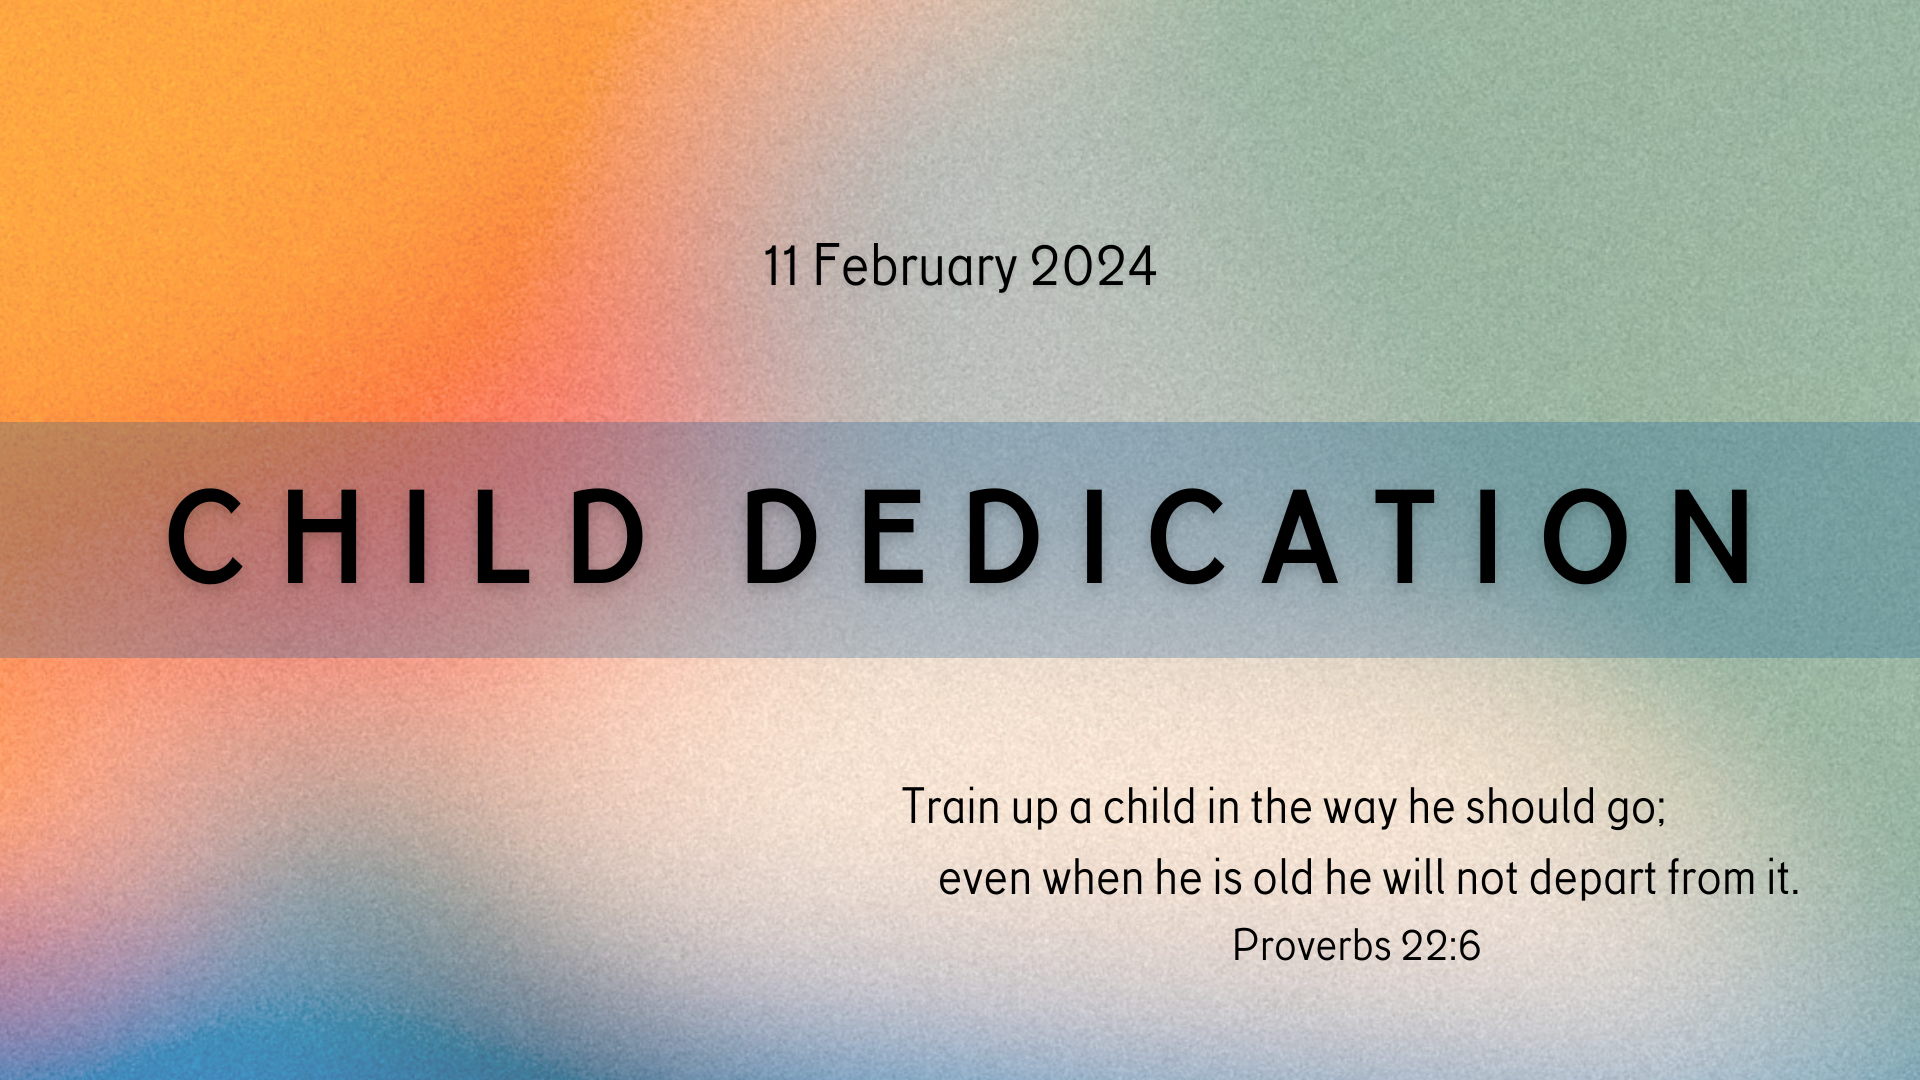 Child Dedication-4 image